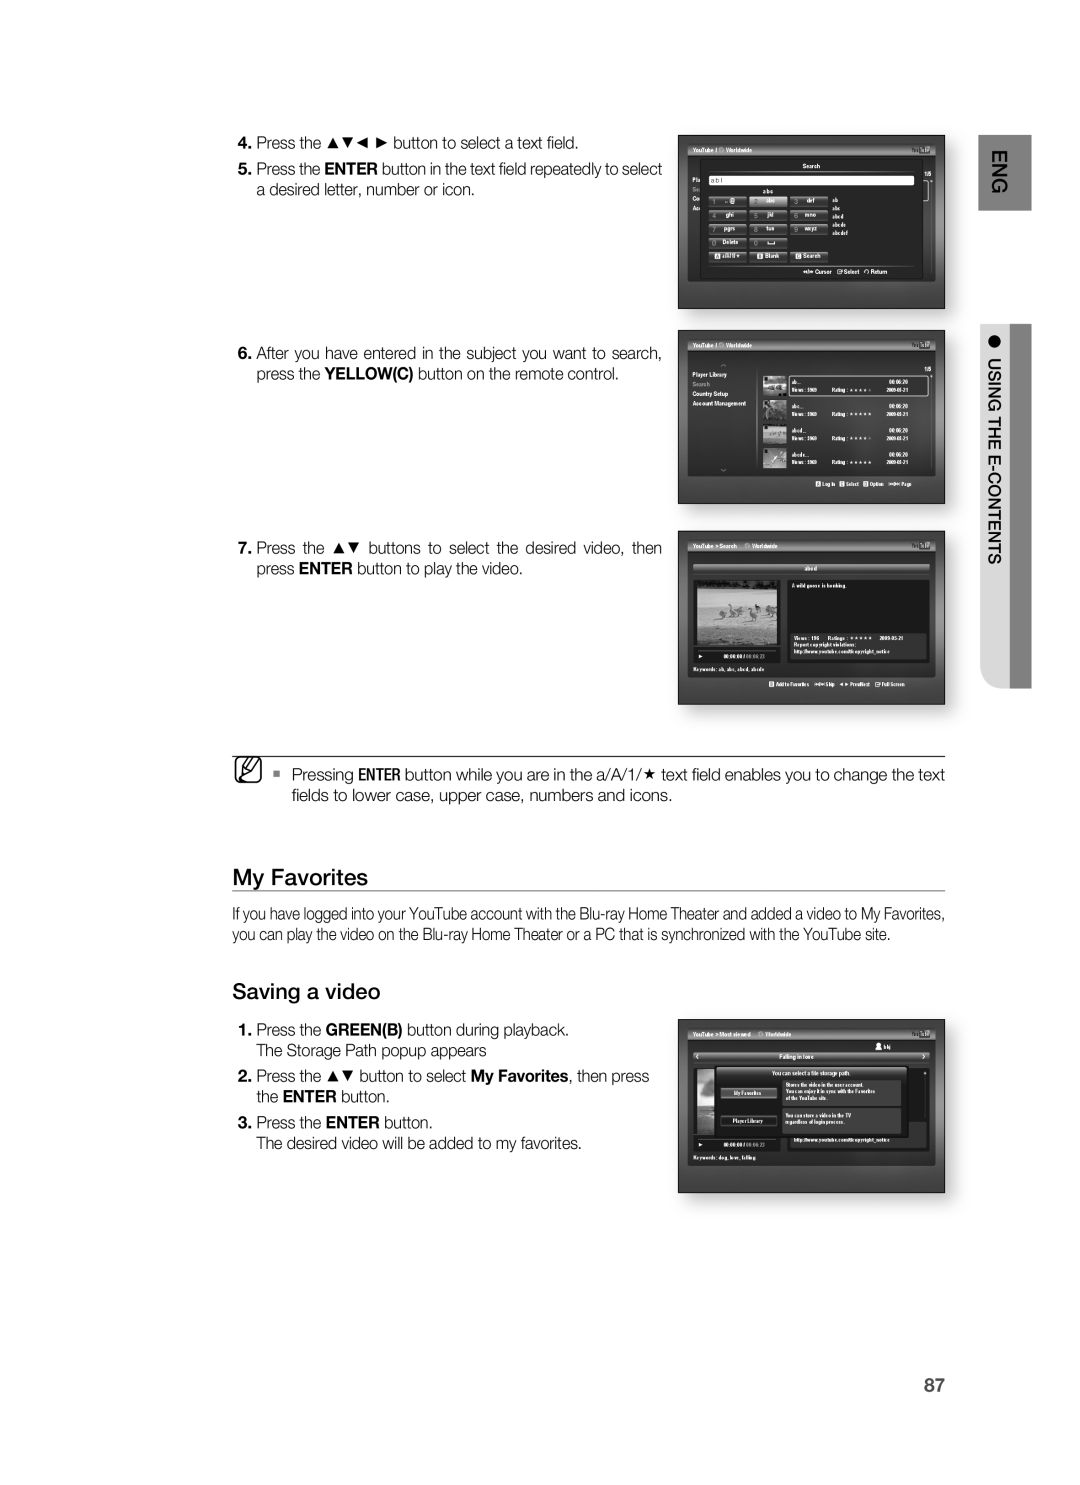 Samsung HT-BD8200 user manual My Favorites, Saving a video 